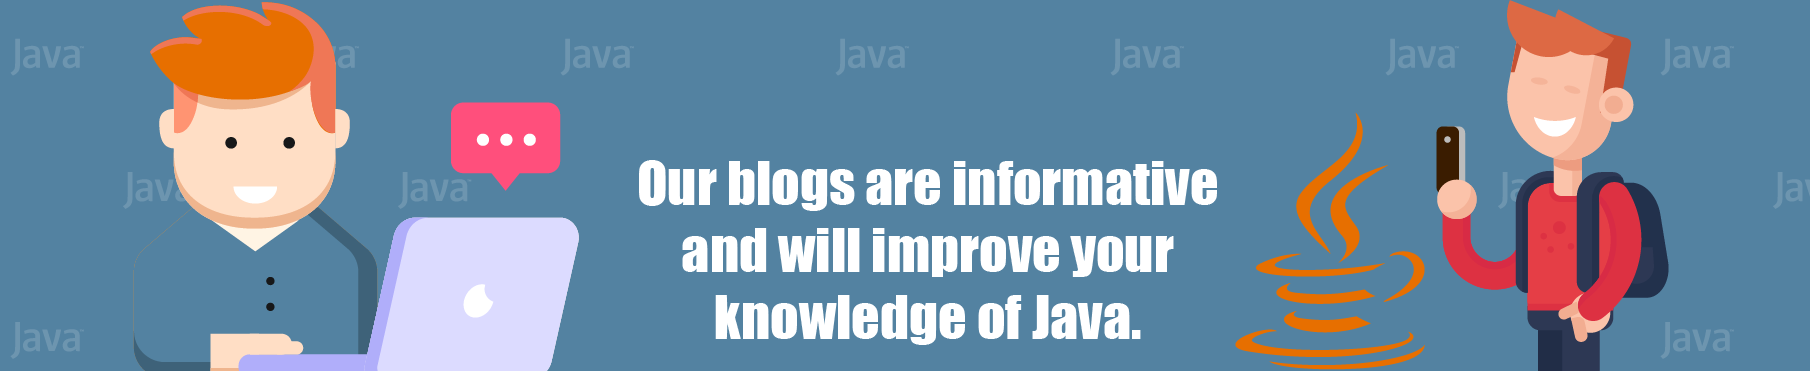 Java Homework Help Banner 4